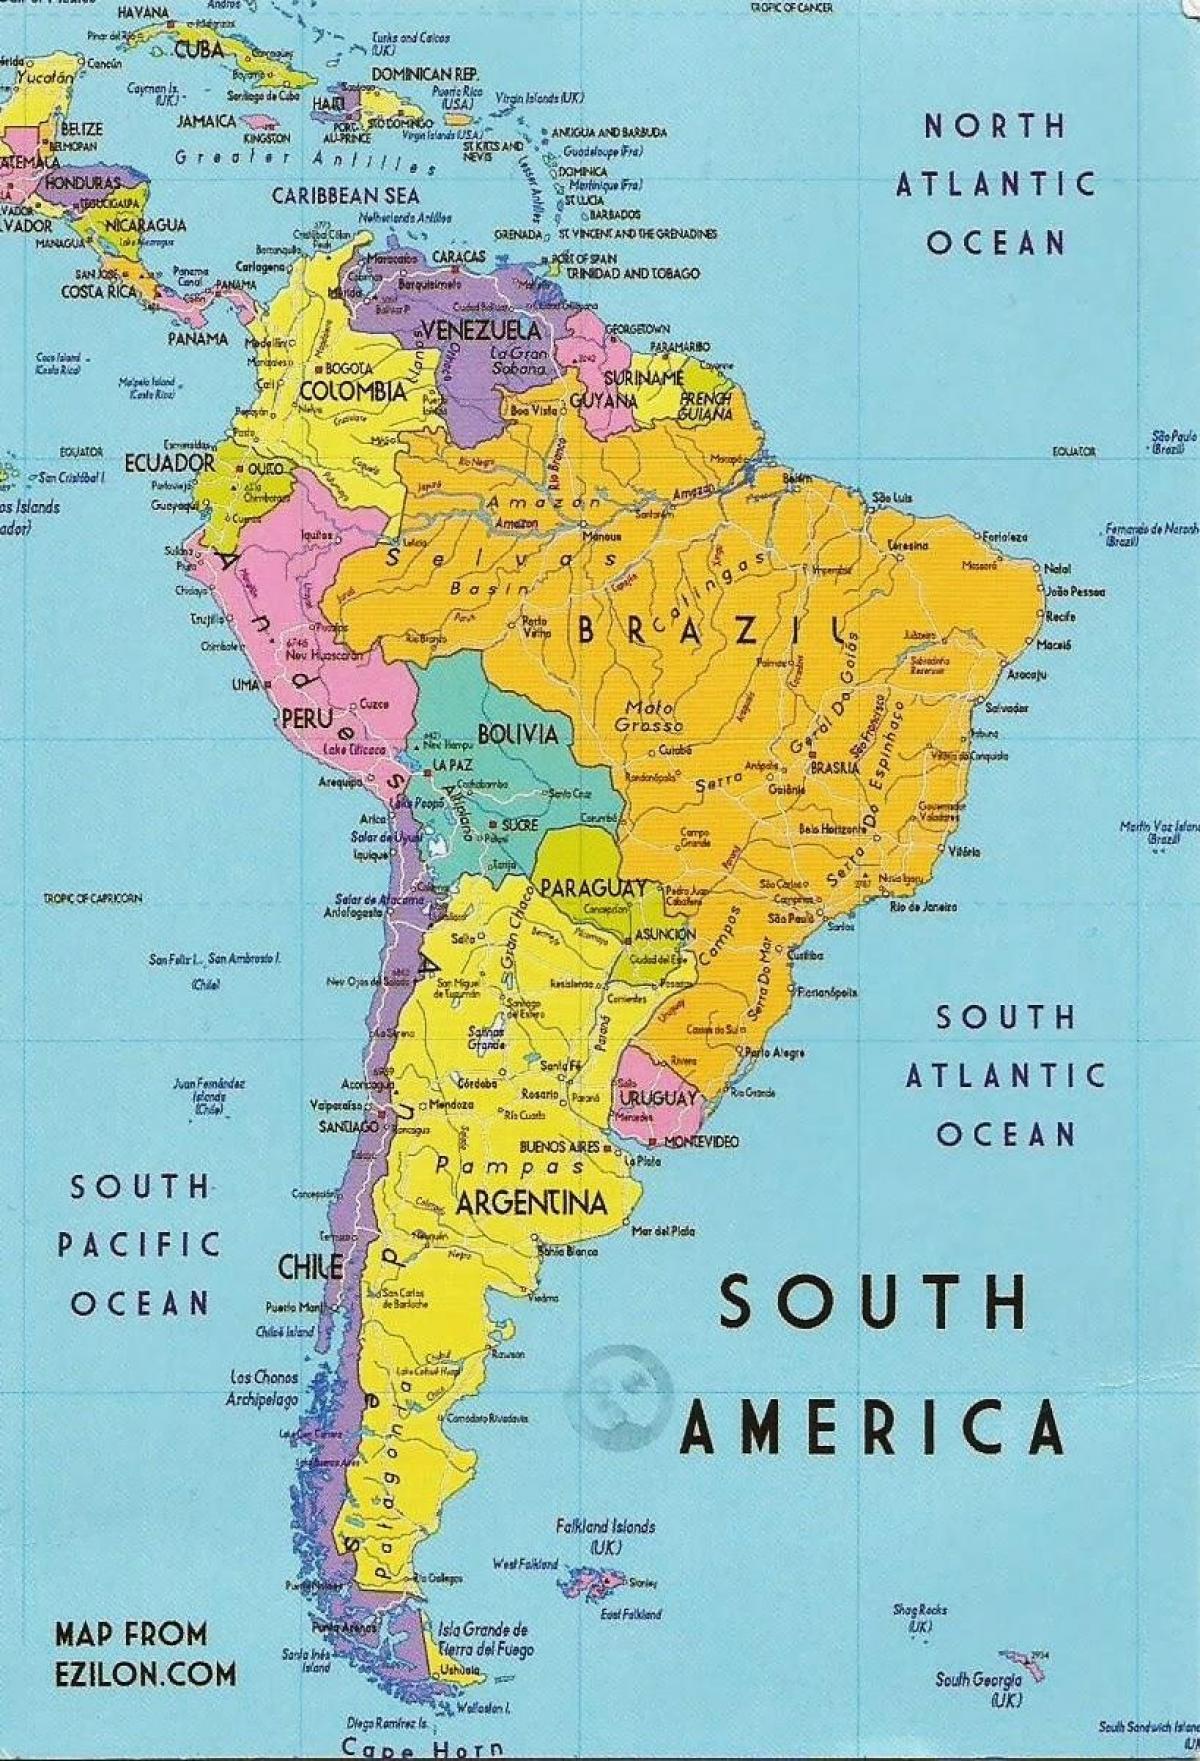 kort over Guyana, sydamerika 